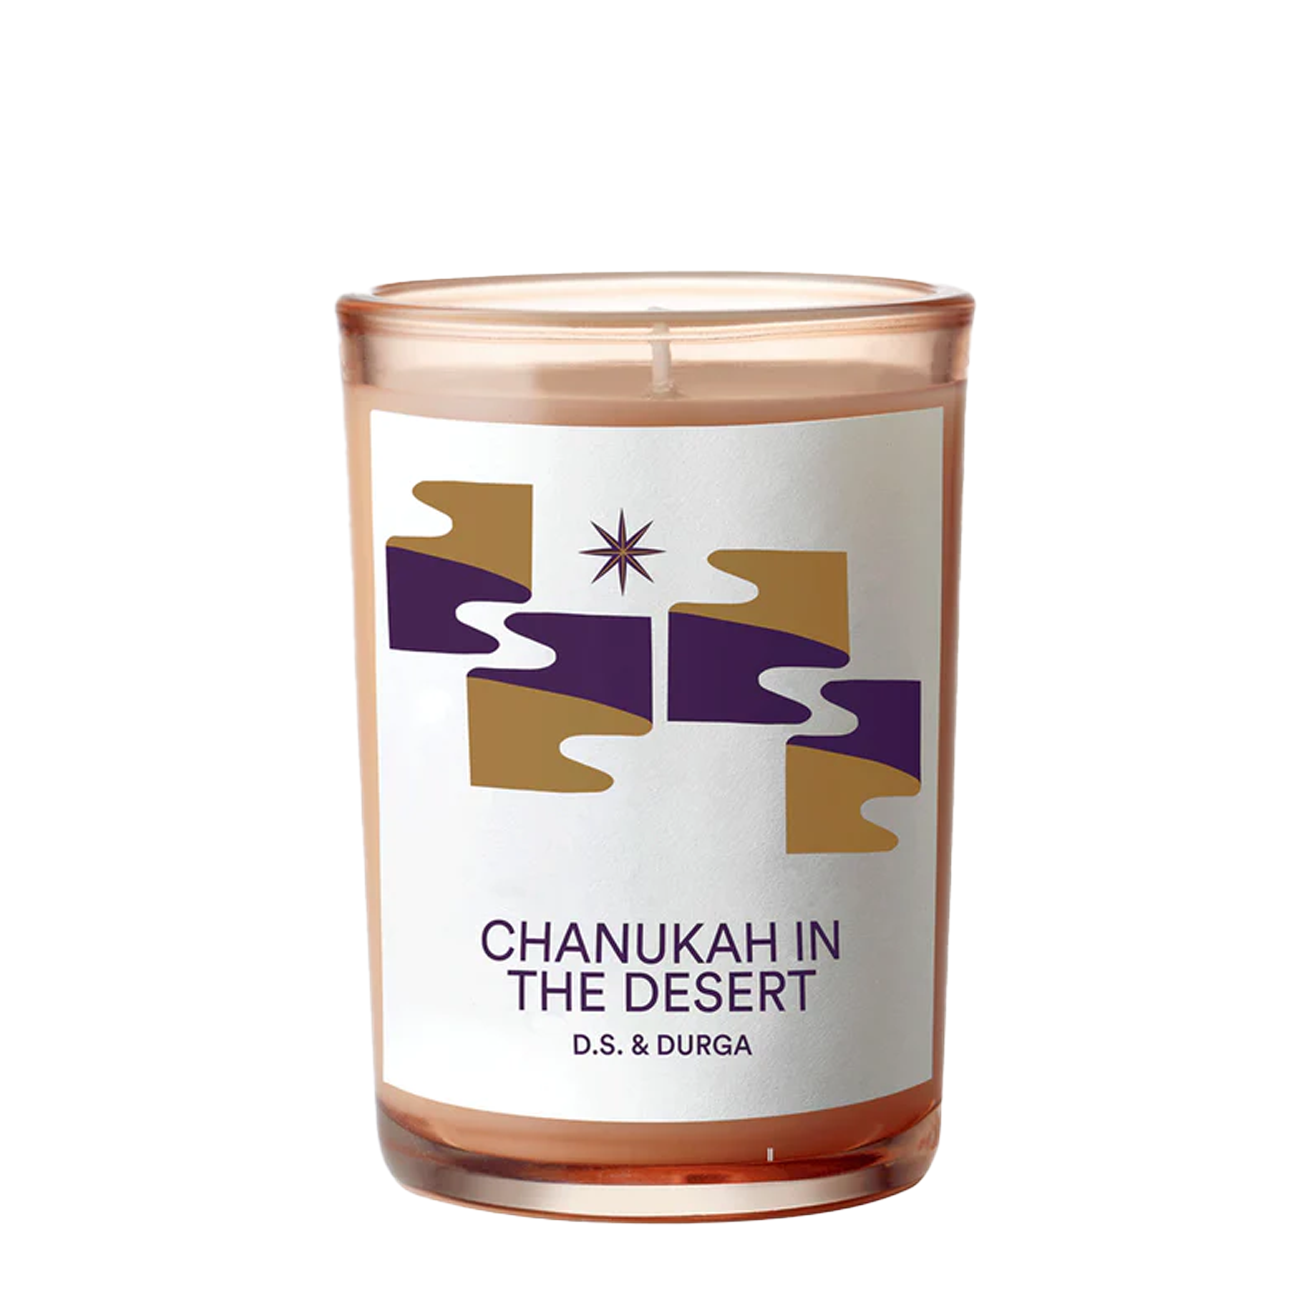 d.s. & durga chanukah in the desert candle